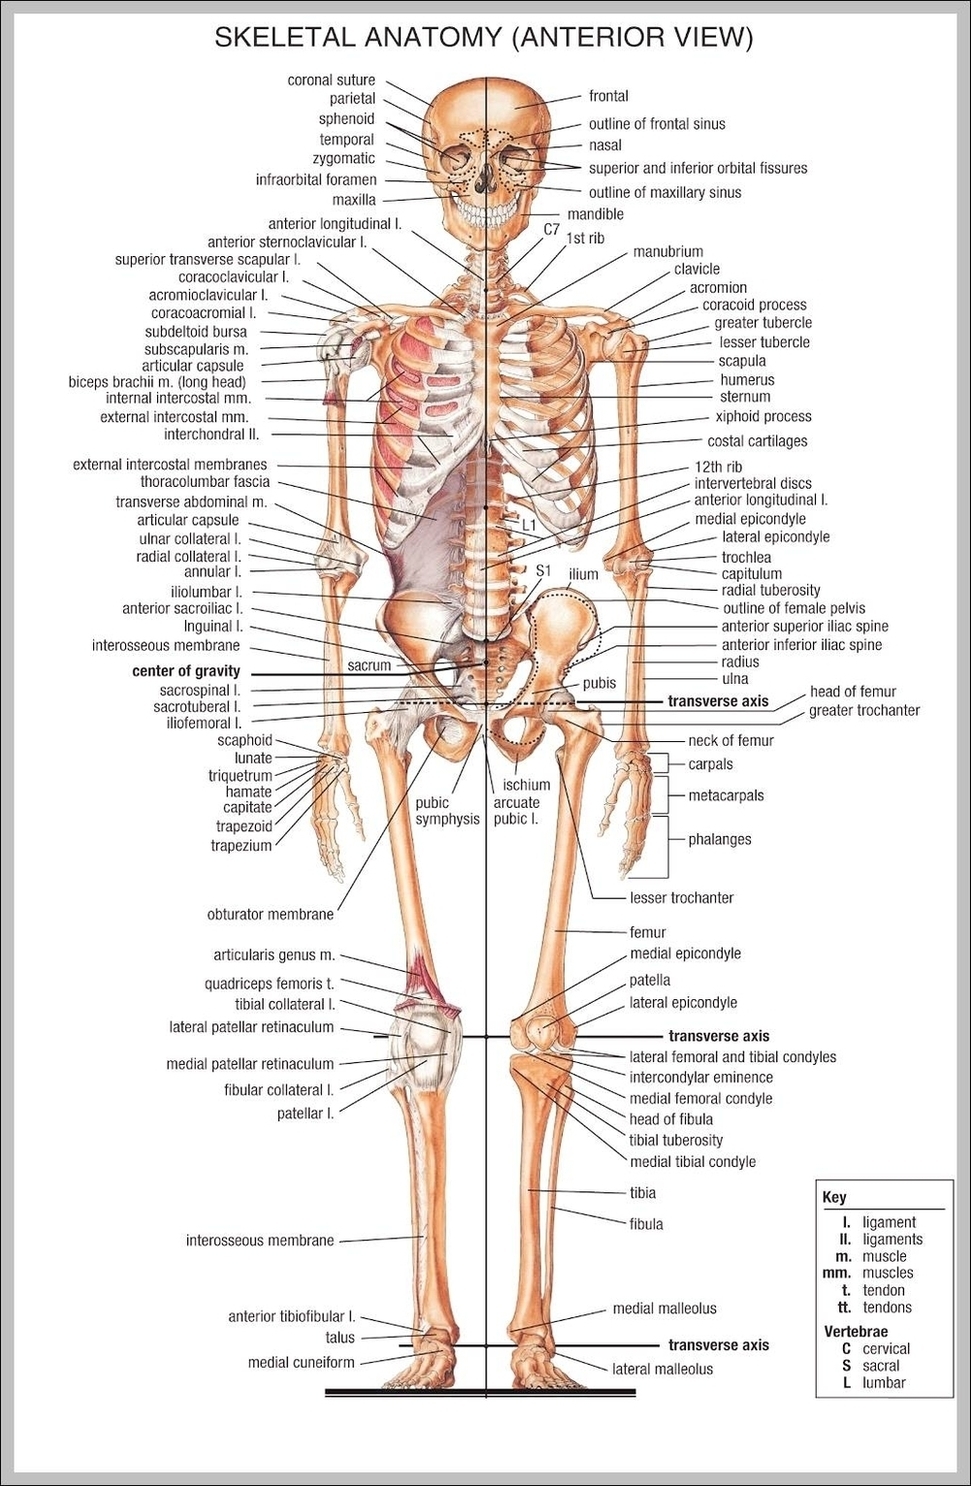 Human Skeleton Labeled Bones Image